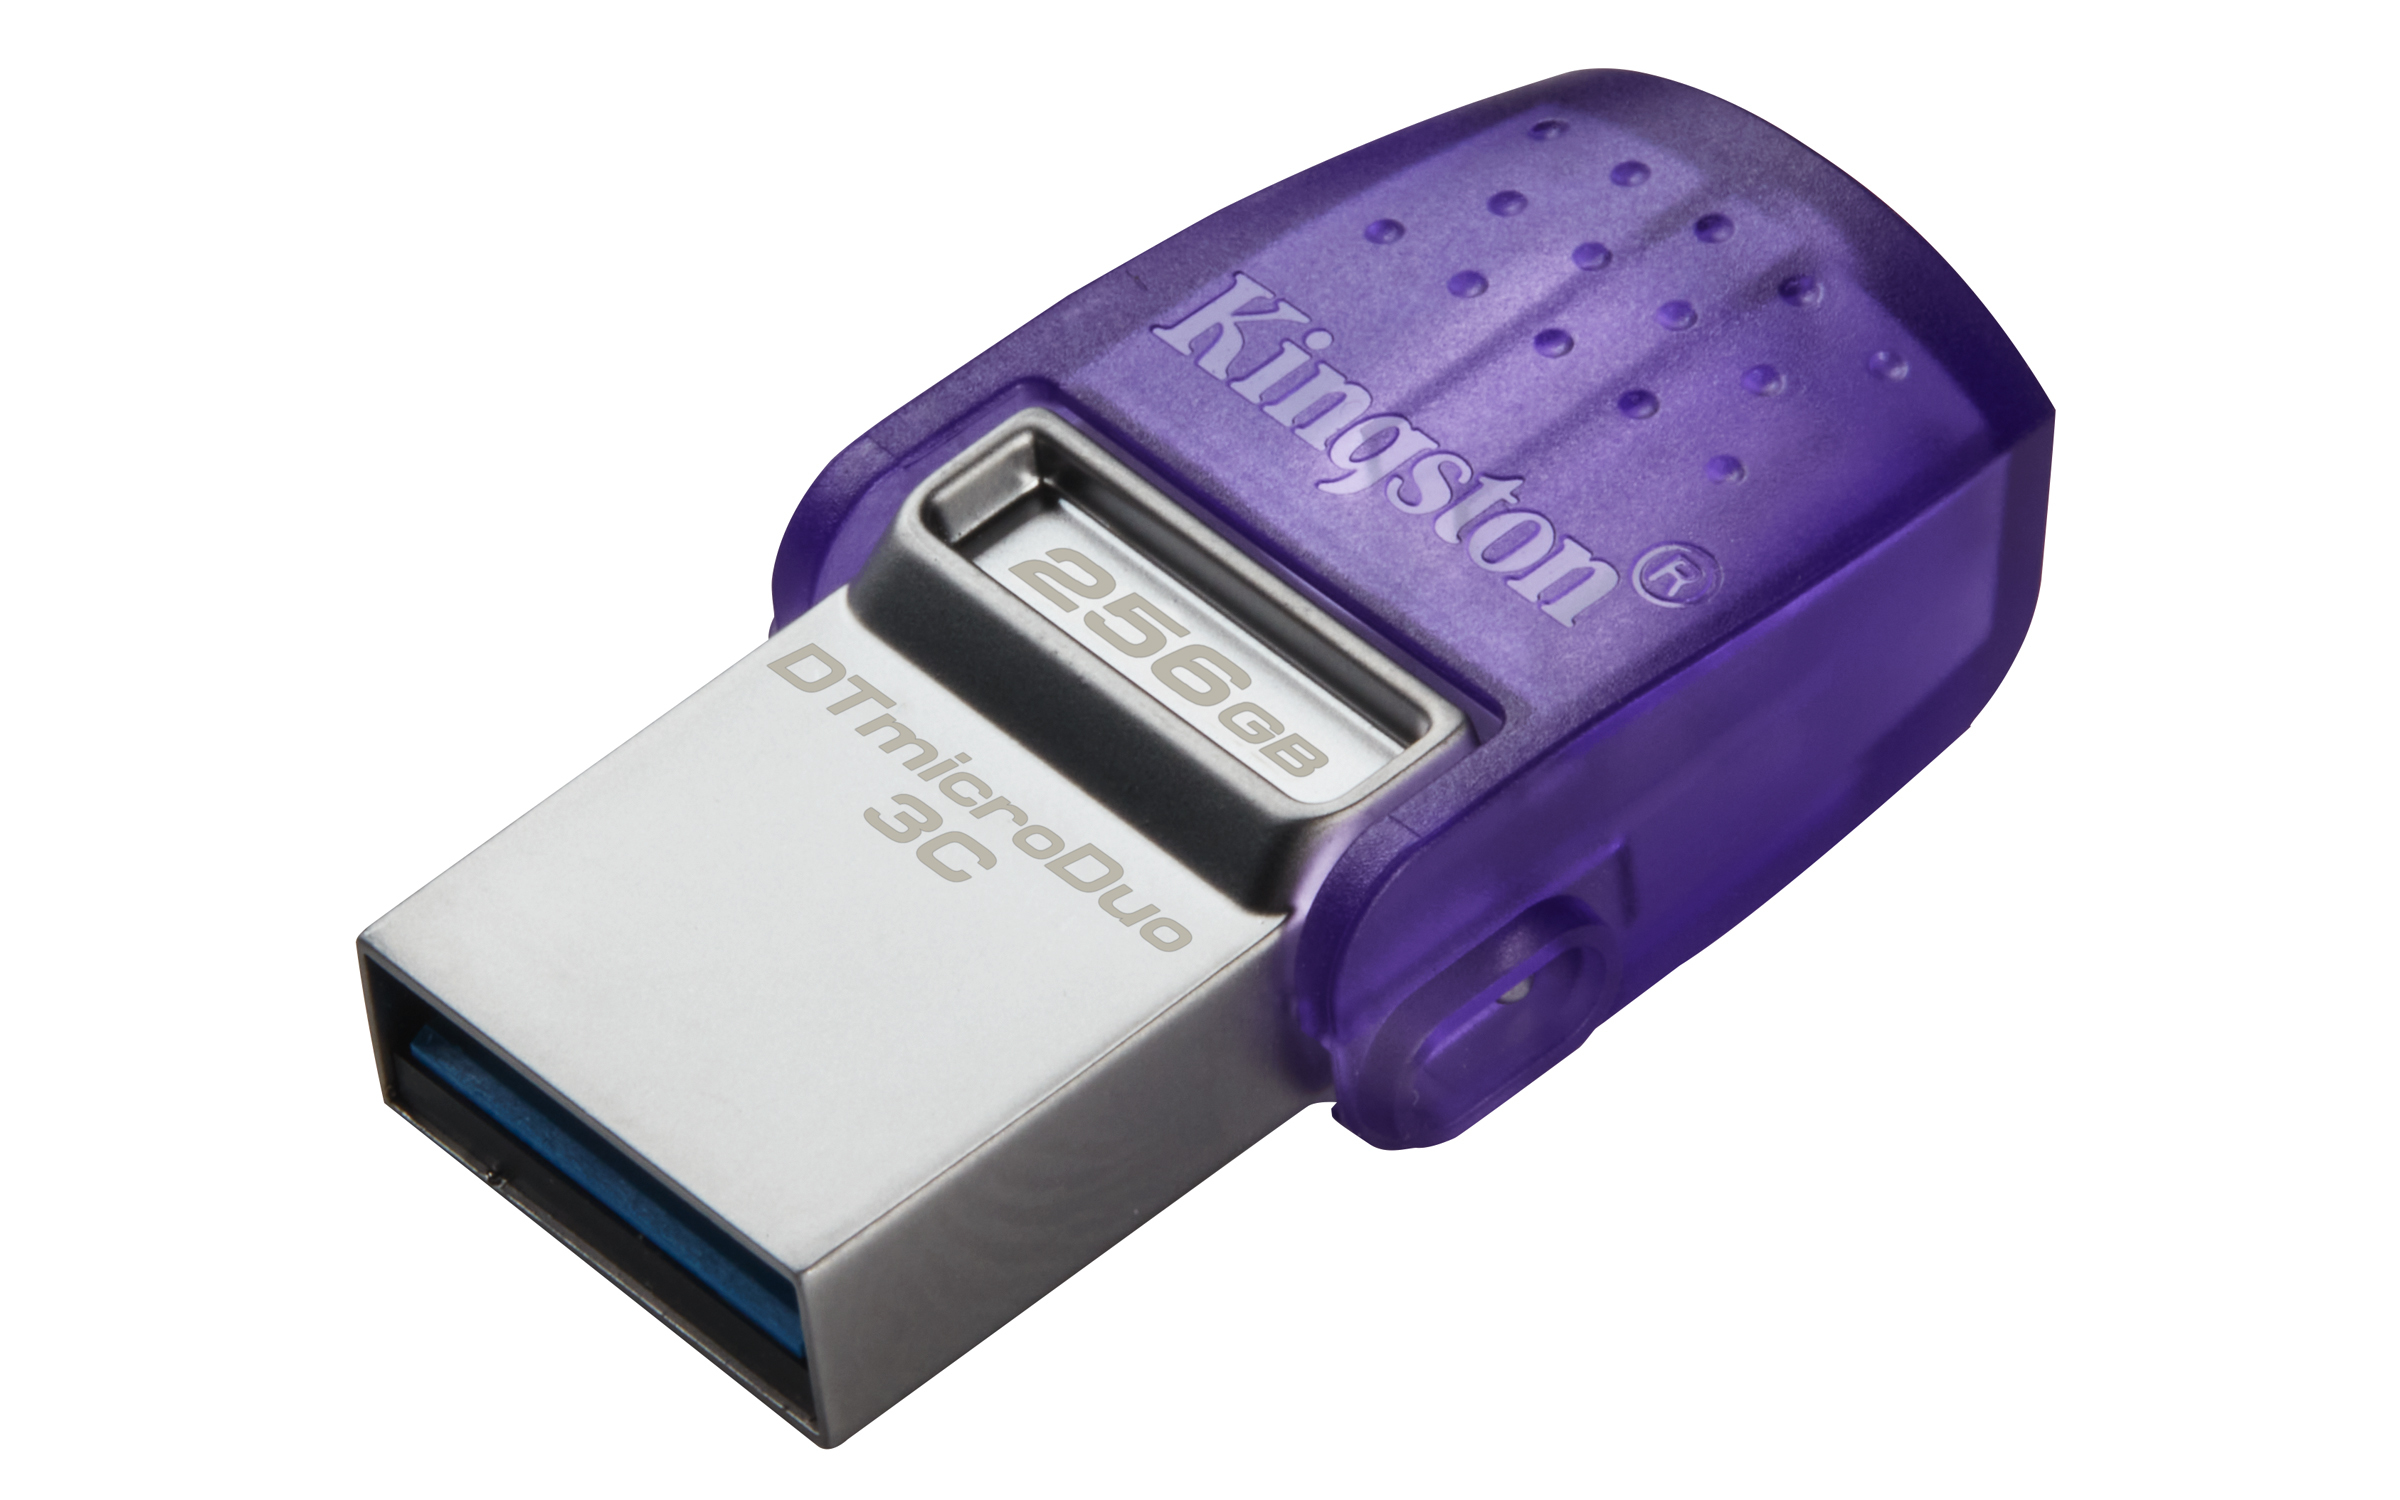 KINGSTON Stick Kingston DTMicroDuo3C 256GB USB 3.0